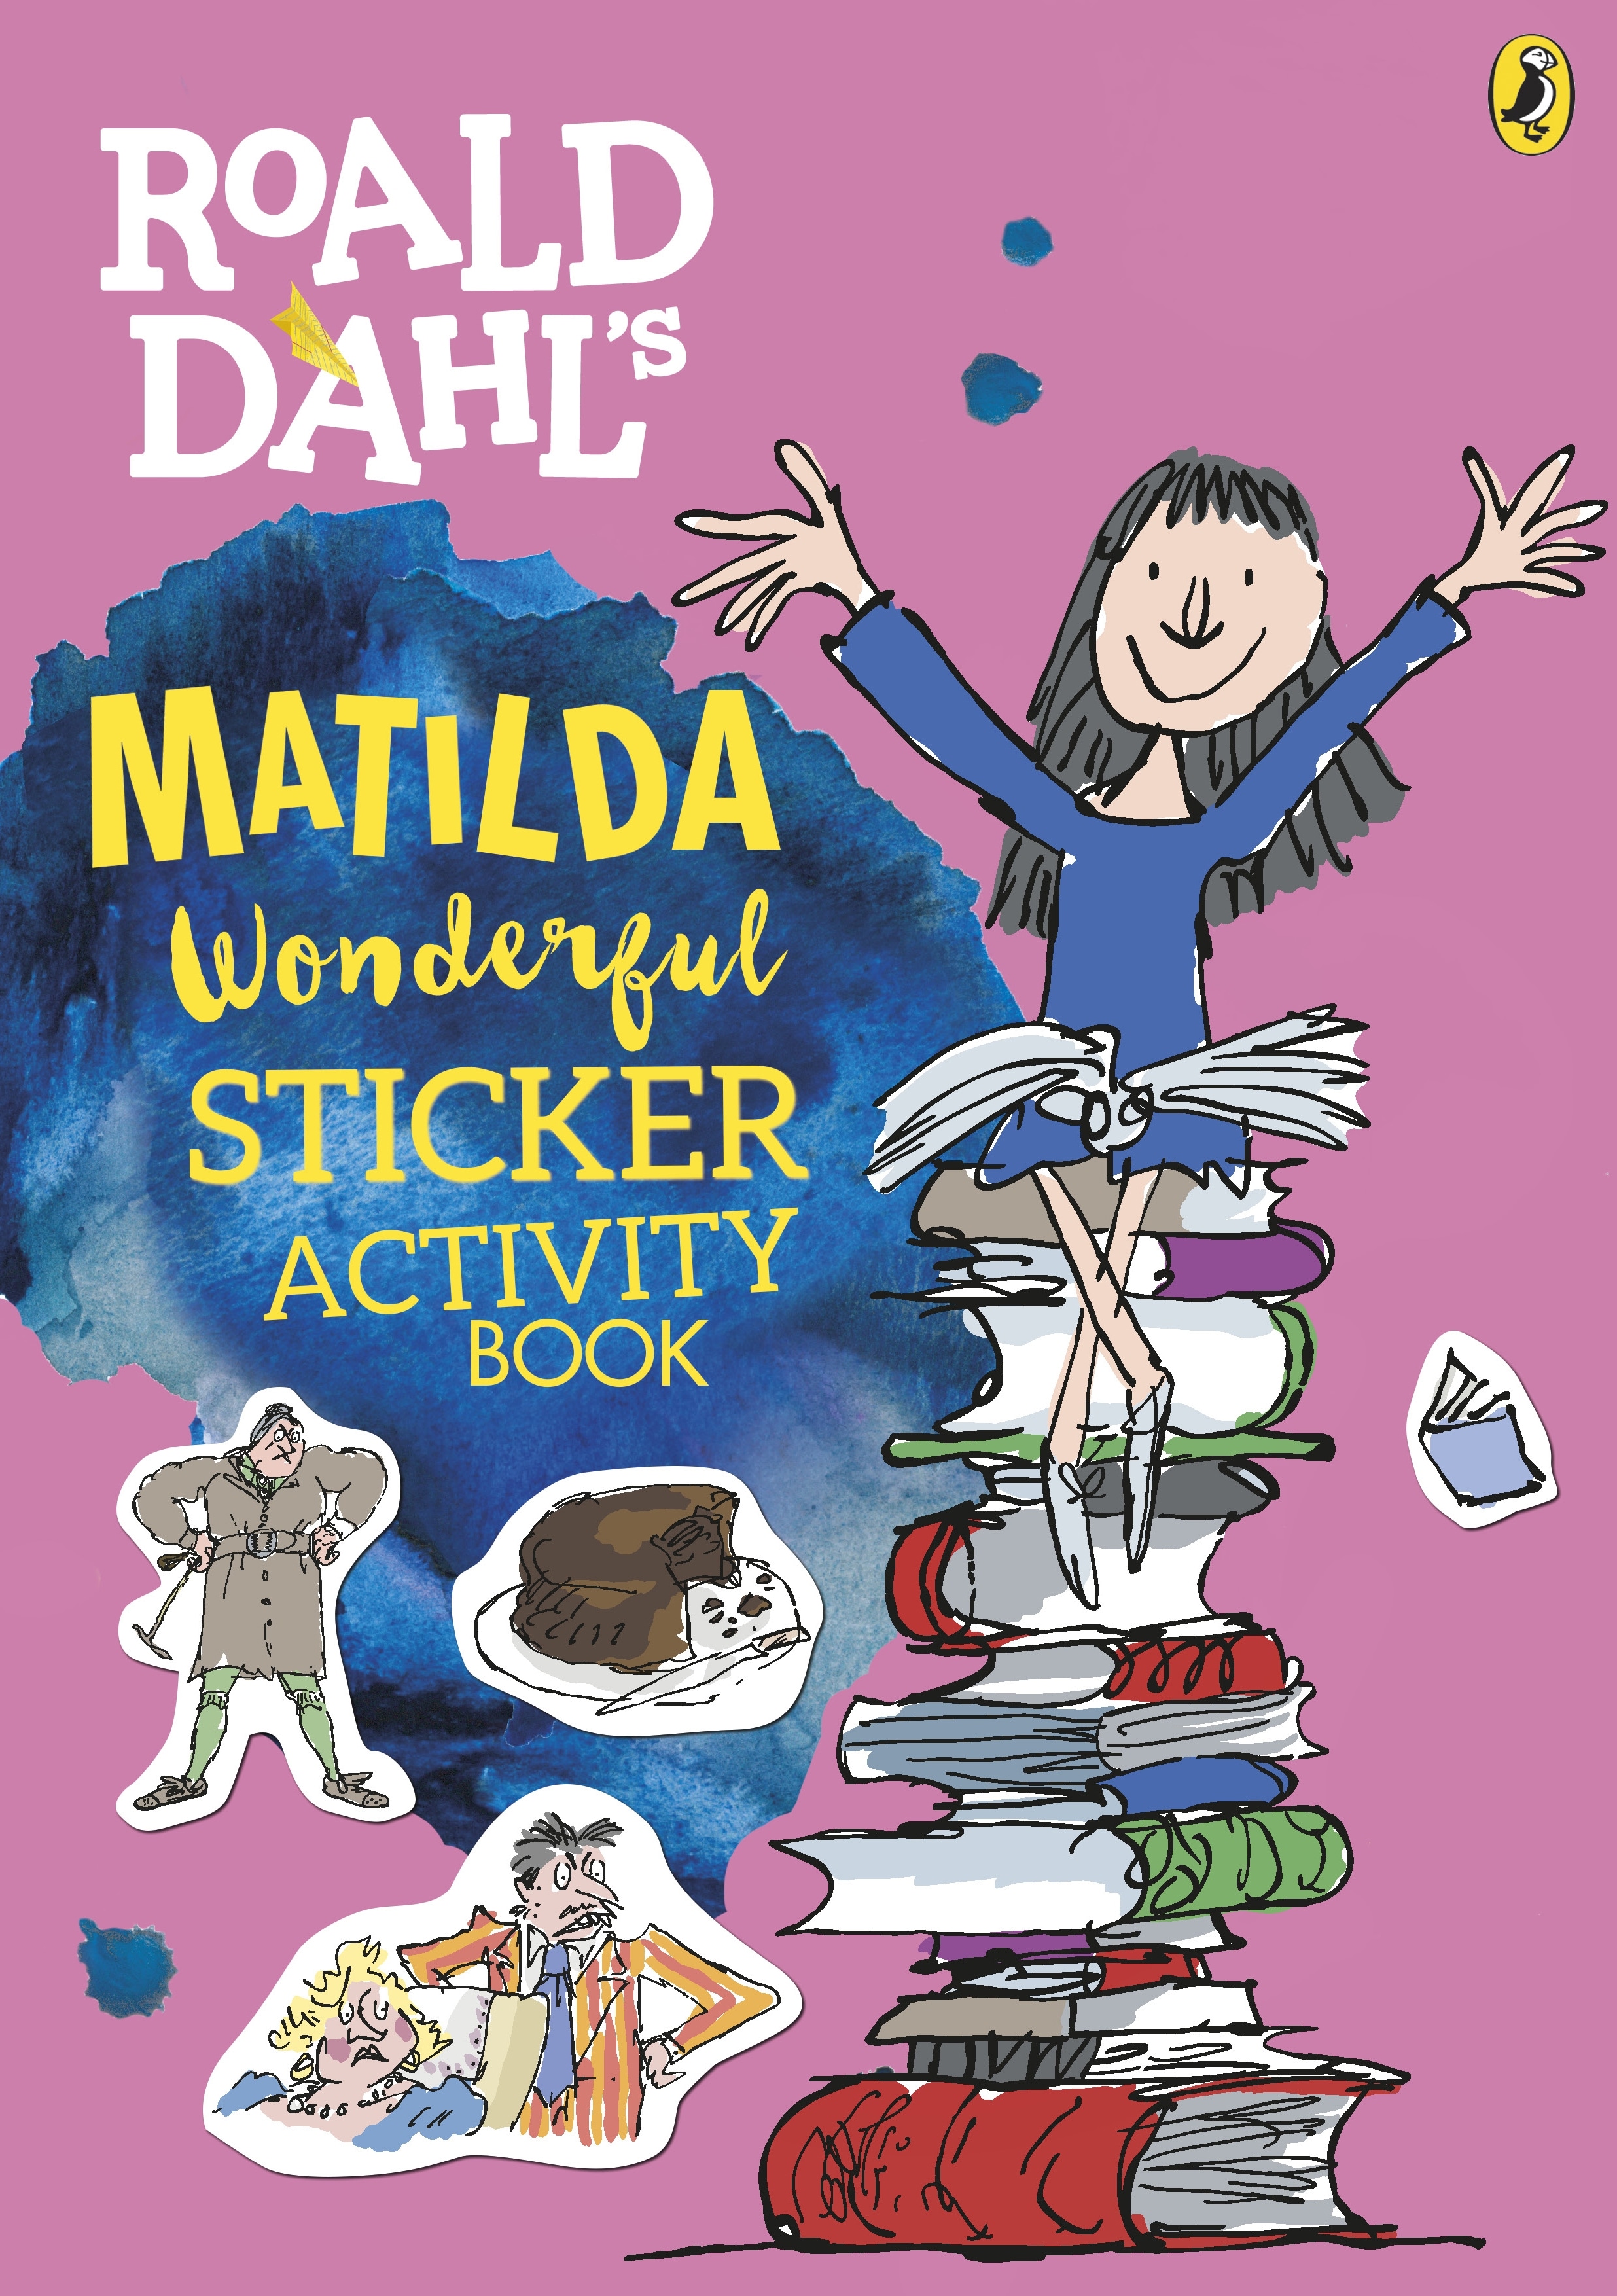 Book “Roald Dahl's Matilda Wonderful Sticker Activity Book” — May 18, 2017